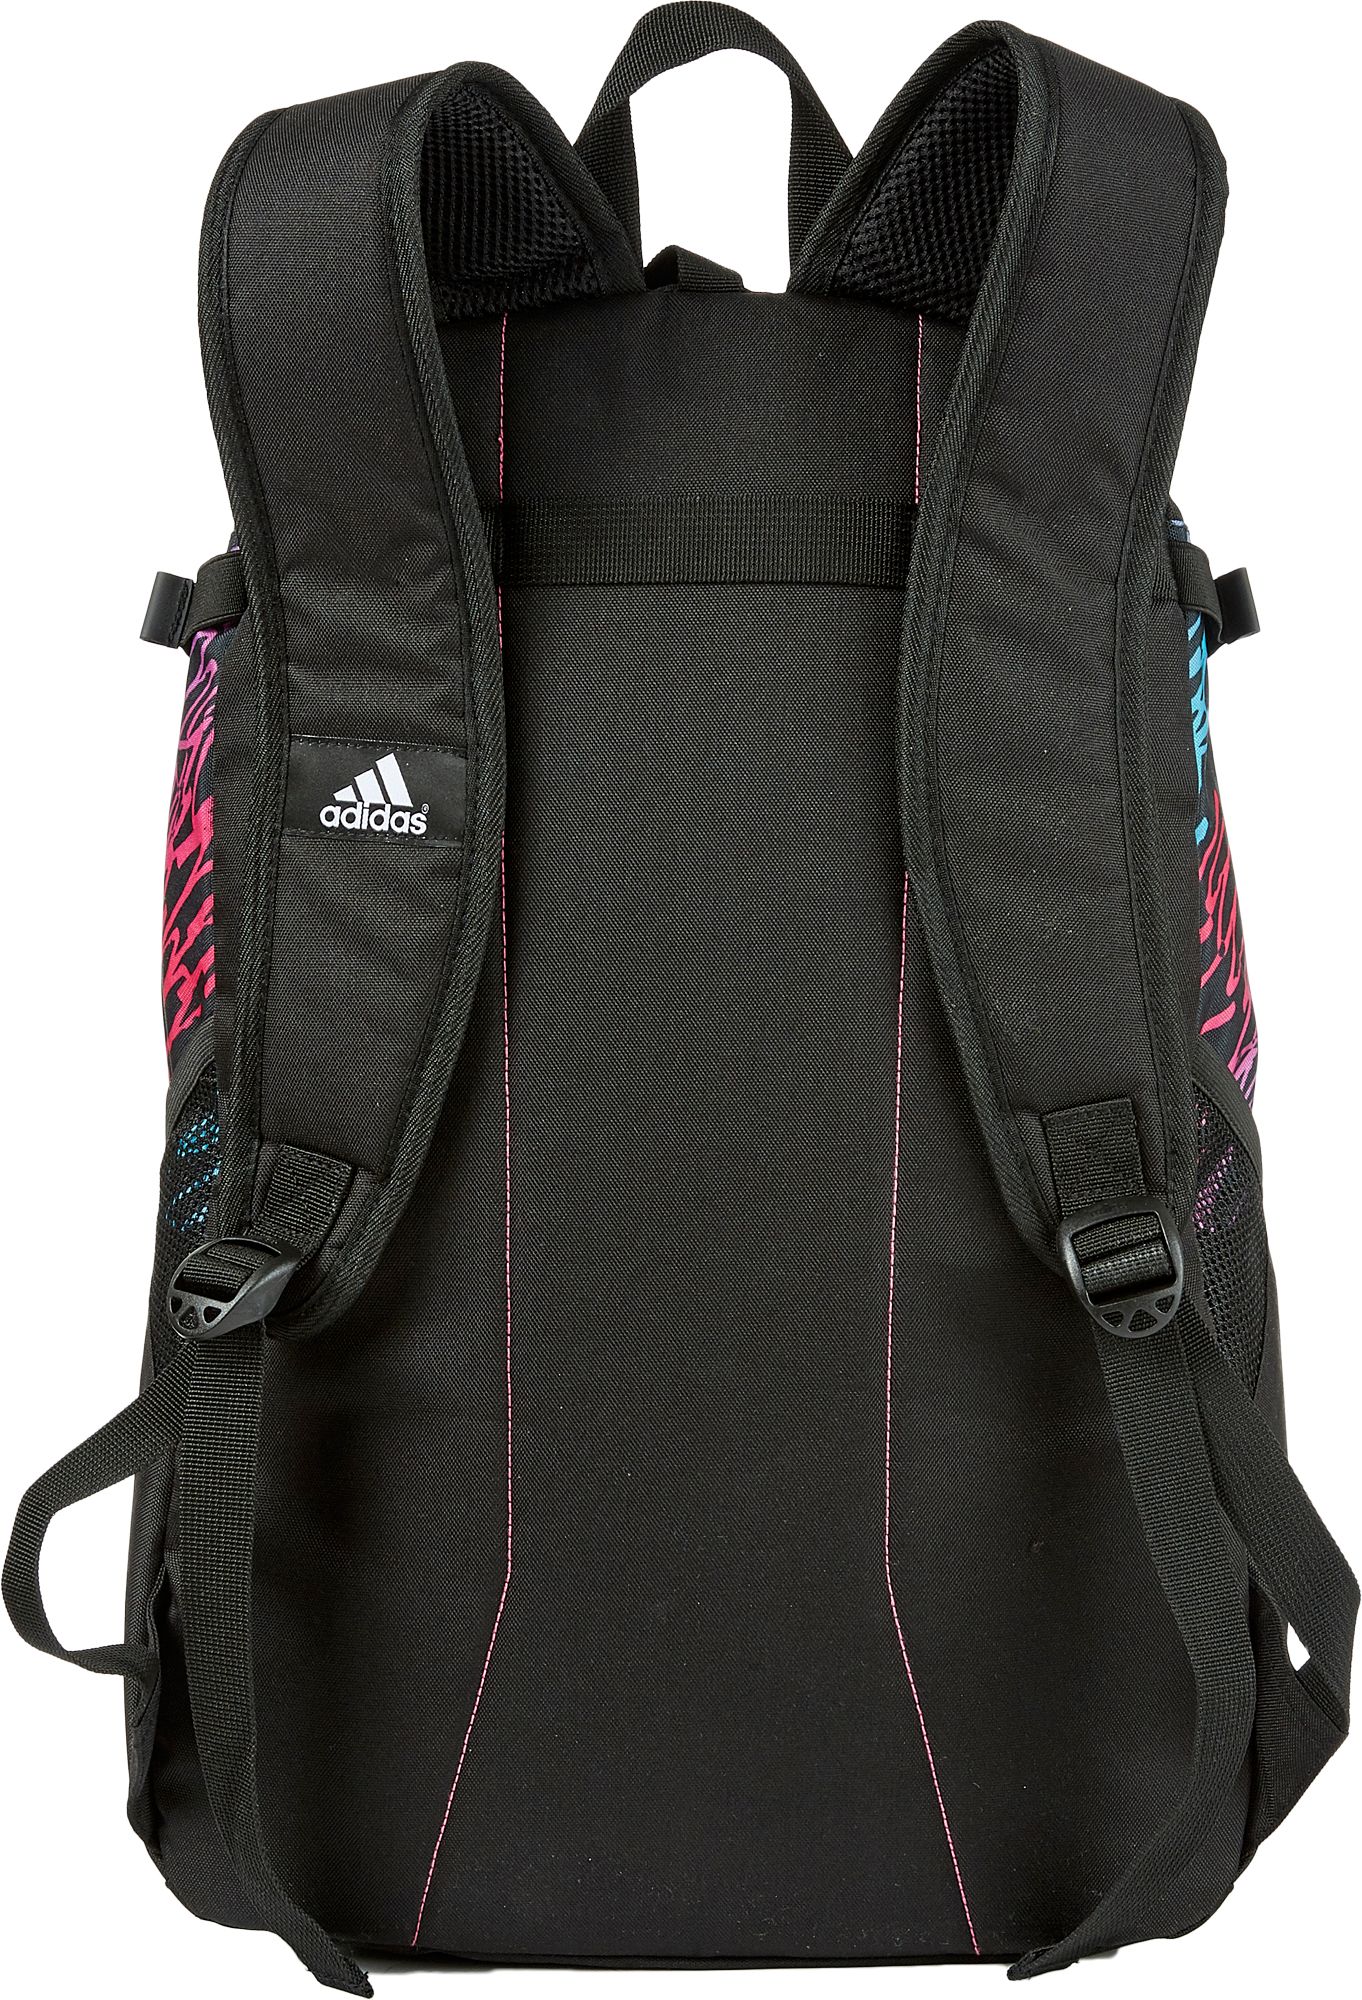 adidas youth baseball backpack